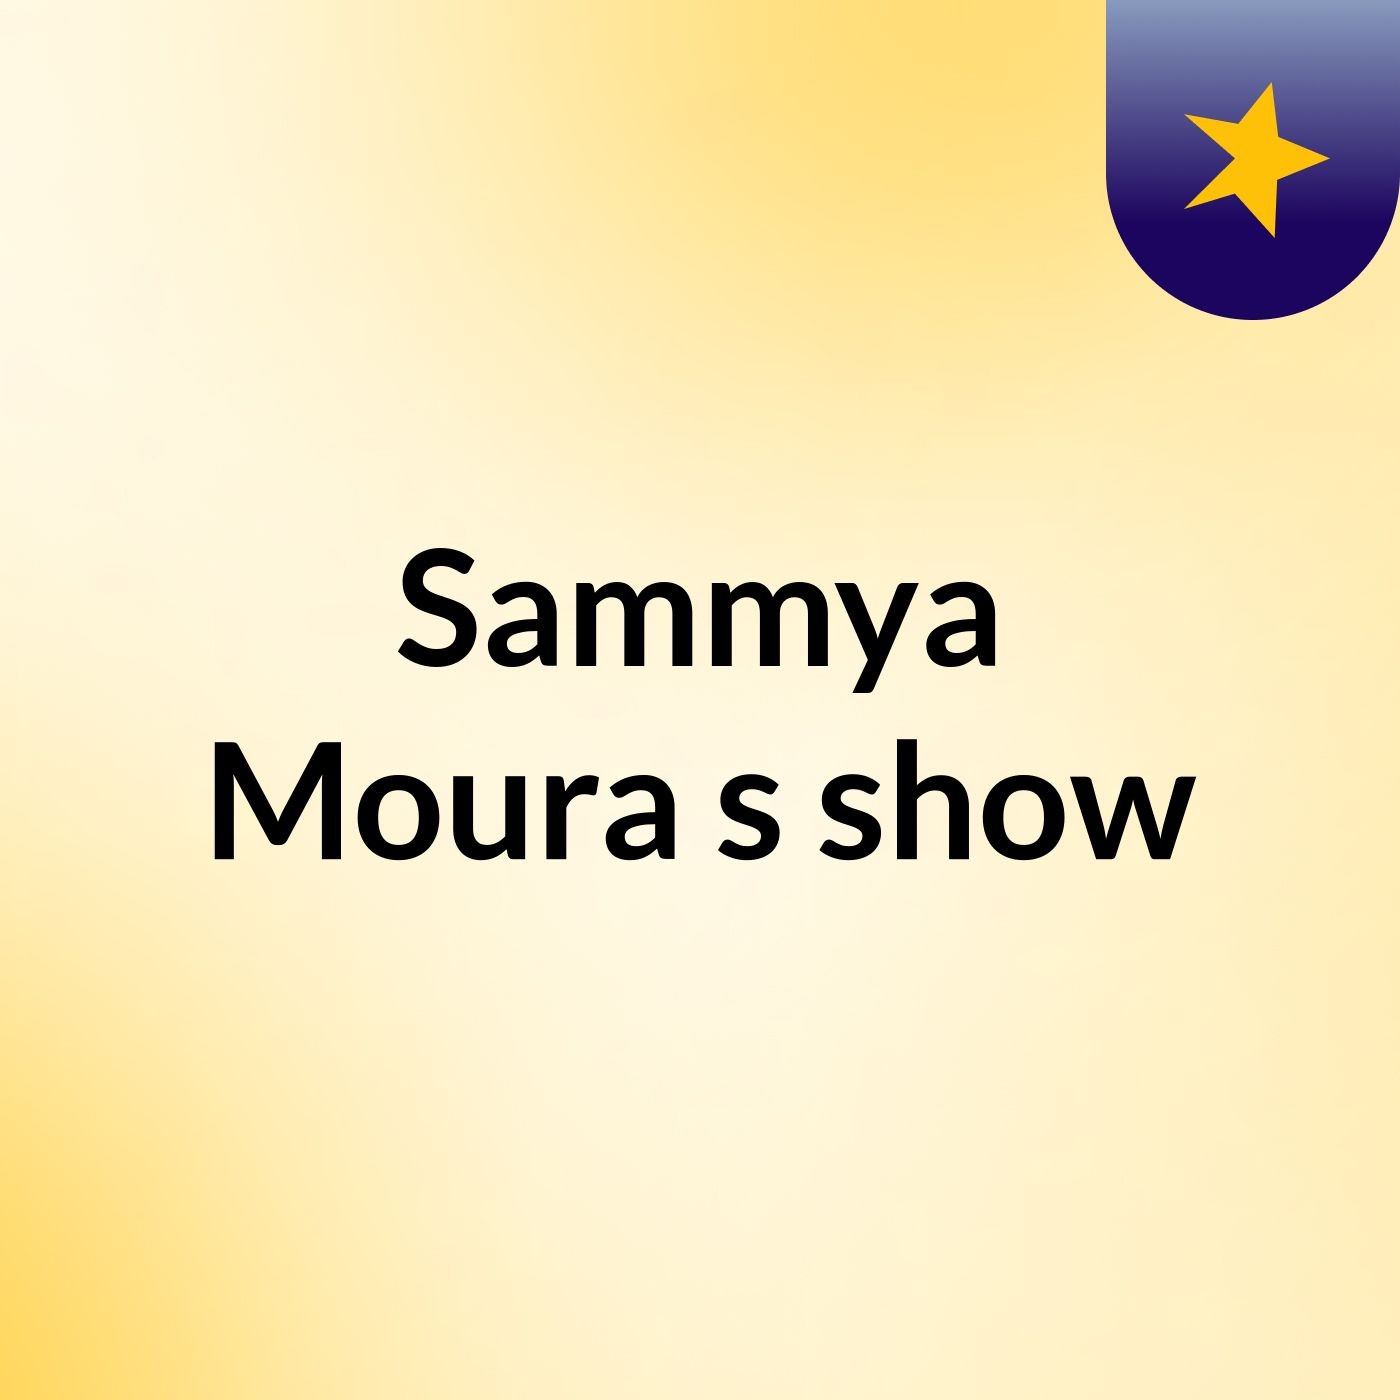 Sammya Moura's show